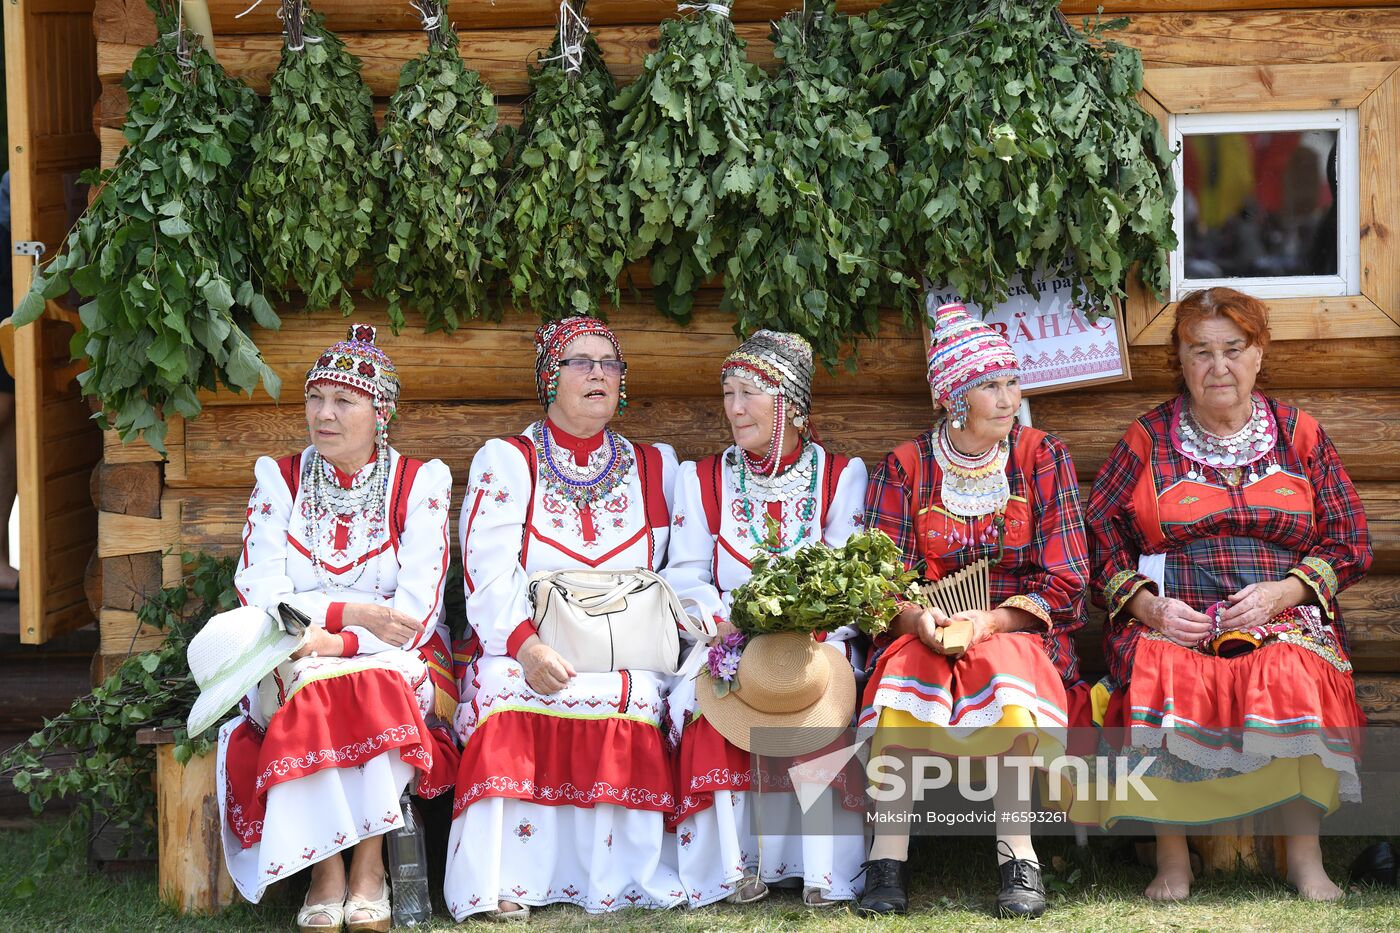 Russia Folk Festival